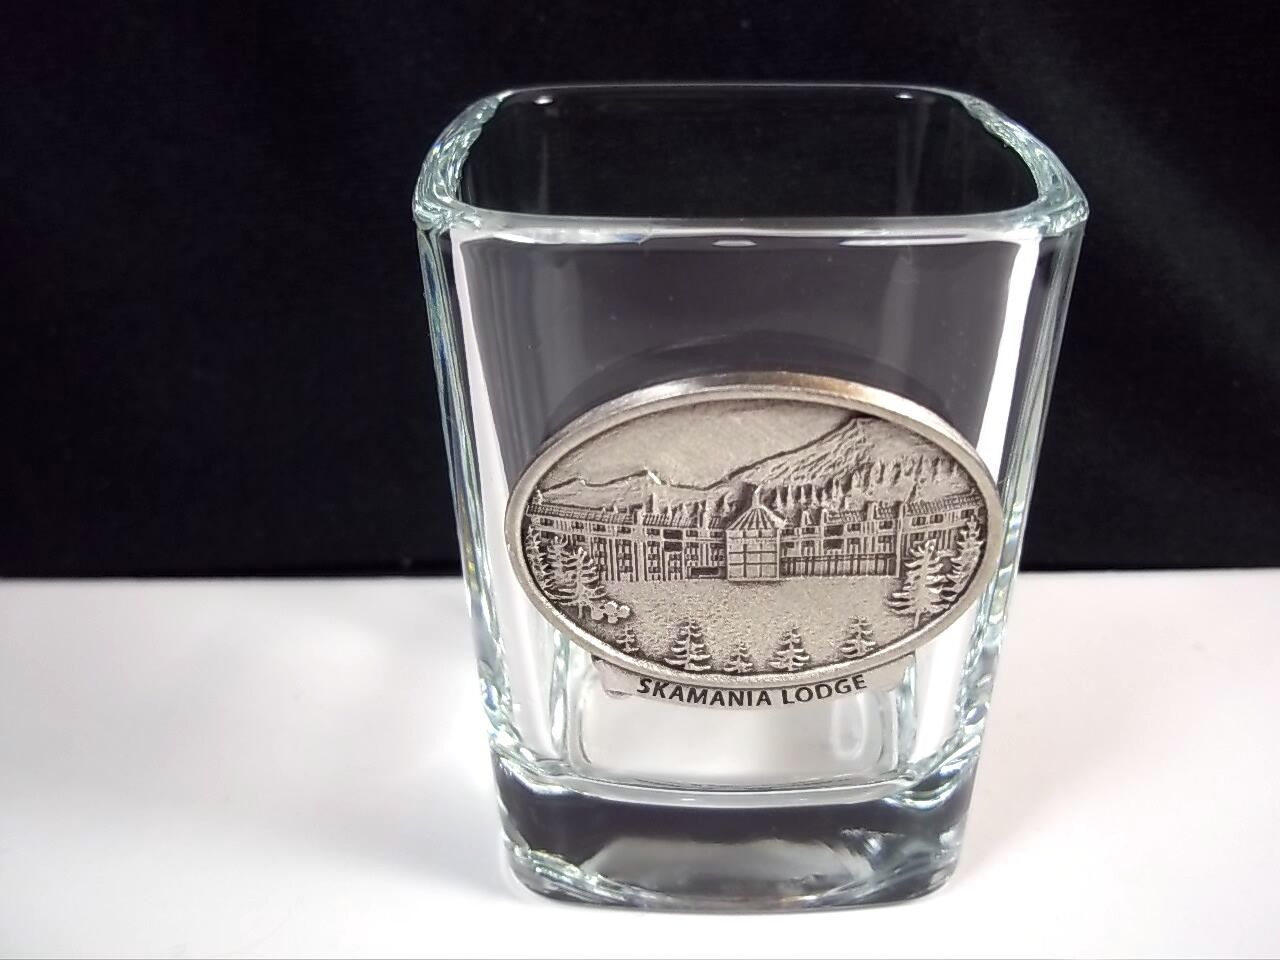 Souvenir square shot glass pewter emblem Skamania Lodge Stevenson Washington - $7.50